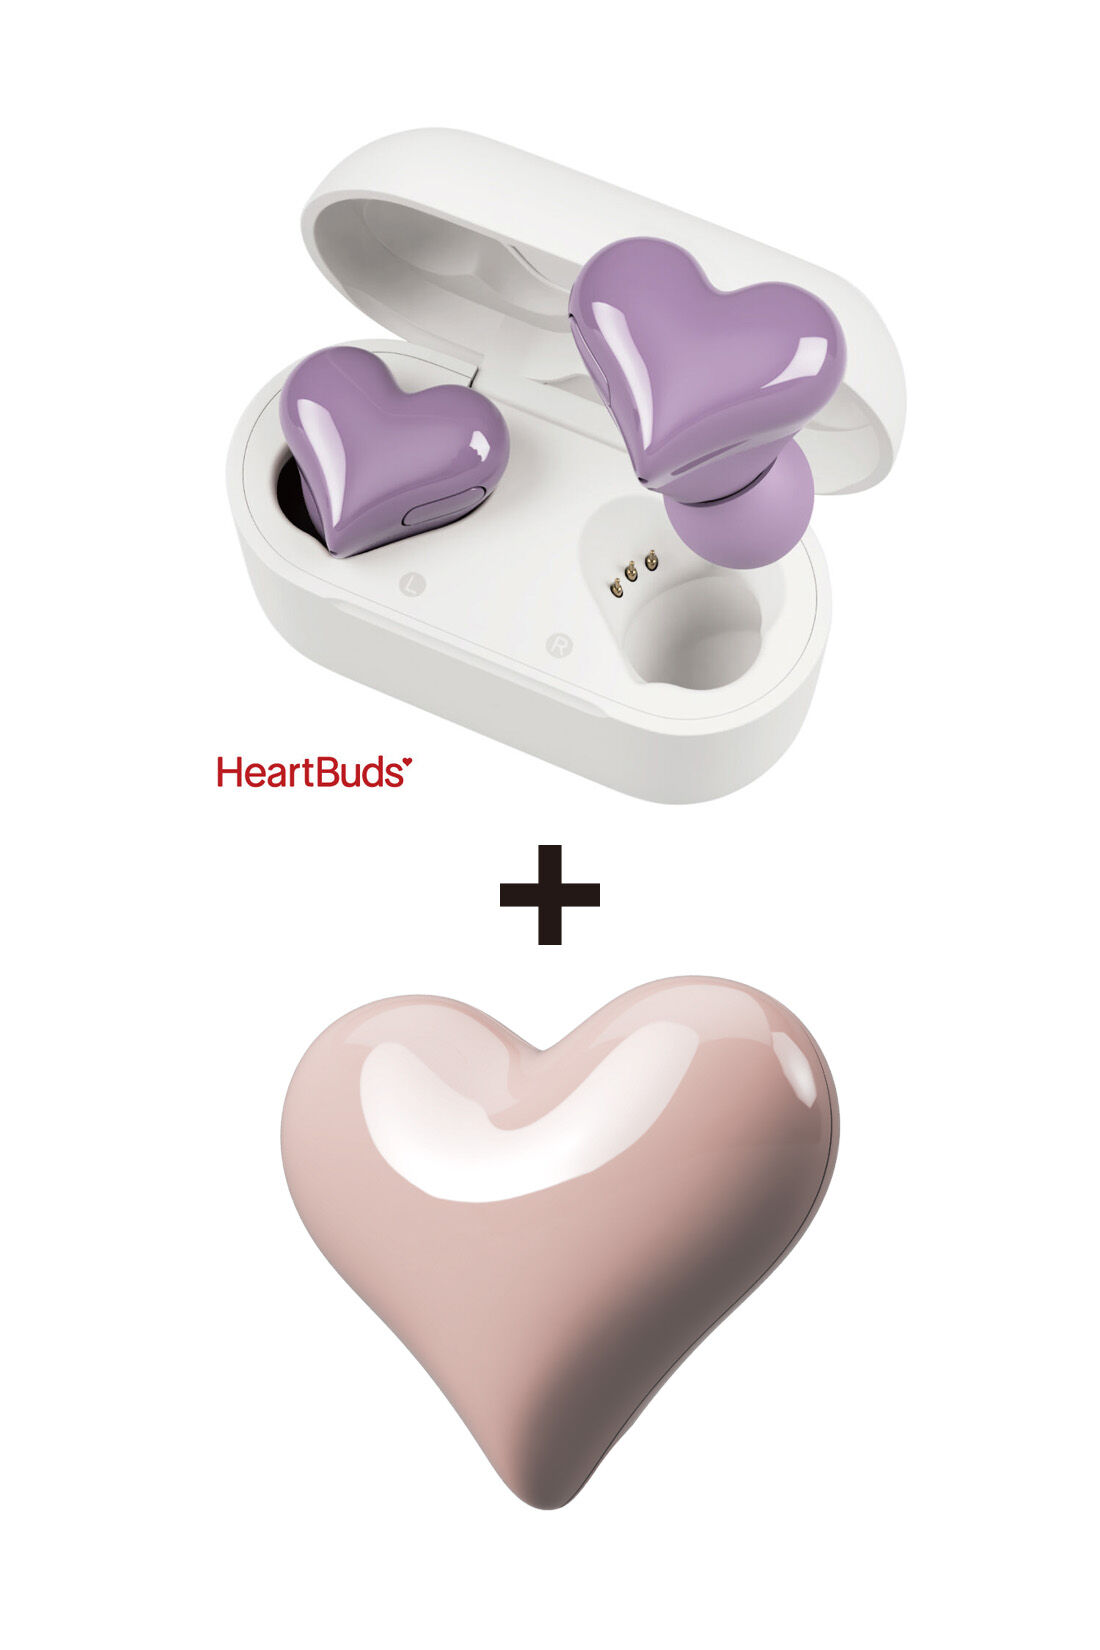 OSYAIRO|HeartBudsイヤホン〈パープル〉＆チャージャー〈ピンク〉セット|ワイヤレスイヤホンとチャージャー（充電器）のセットです。